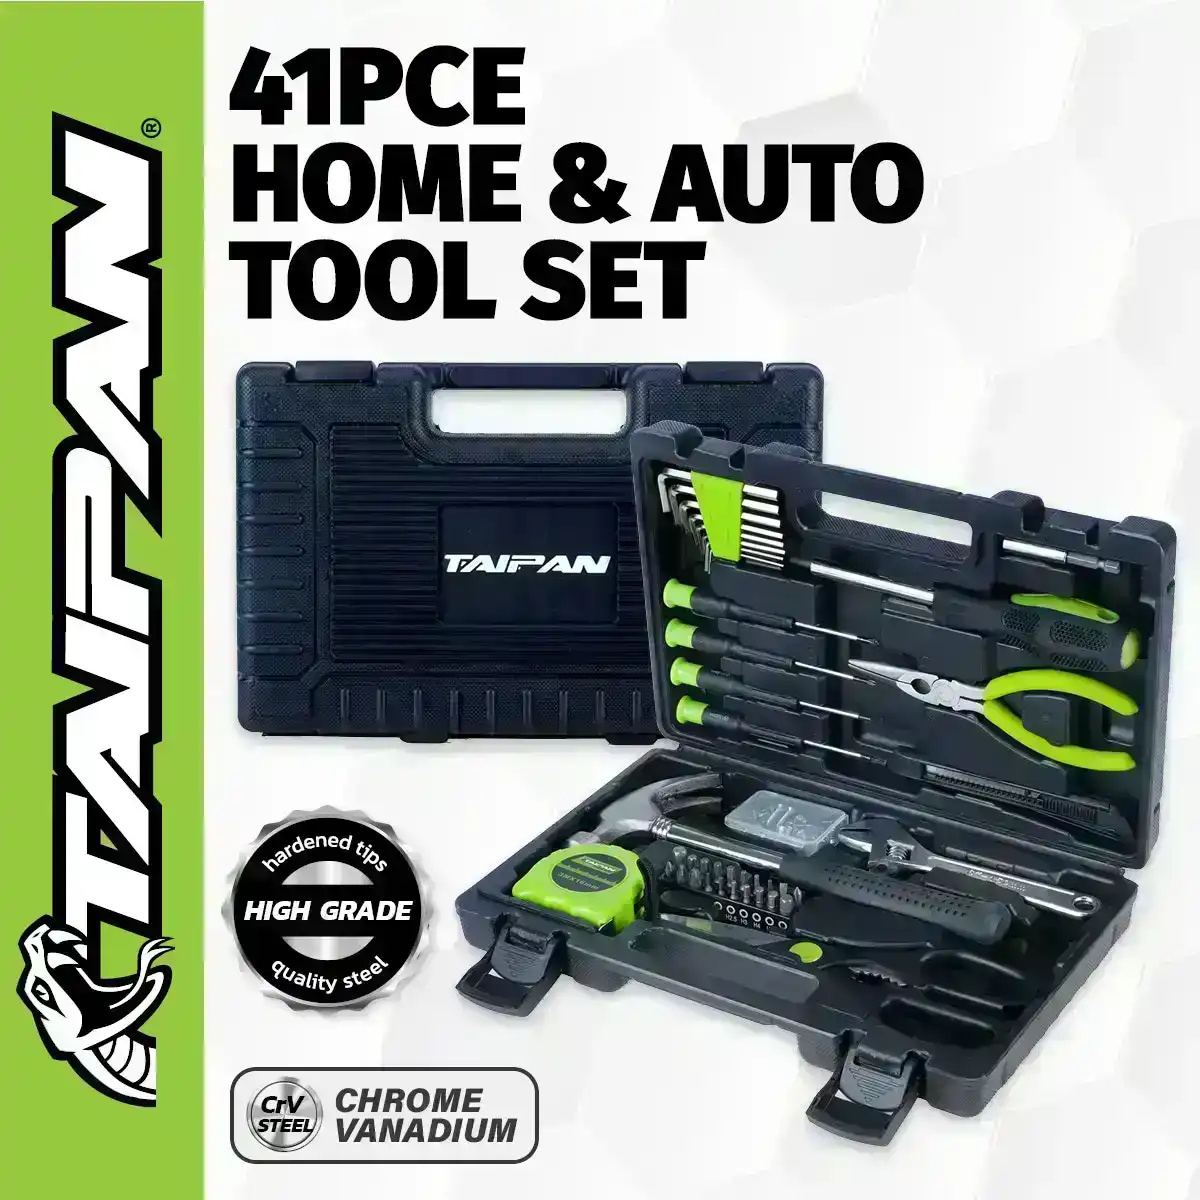 Taipan® 41PCE Home Auto Premium Quality Tool Set Case Chrome Vanadium Steel